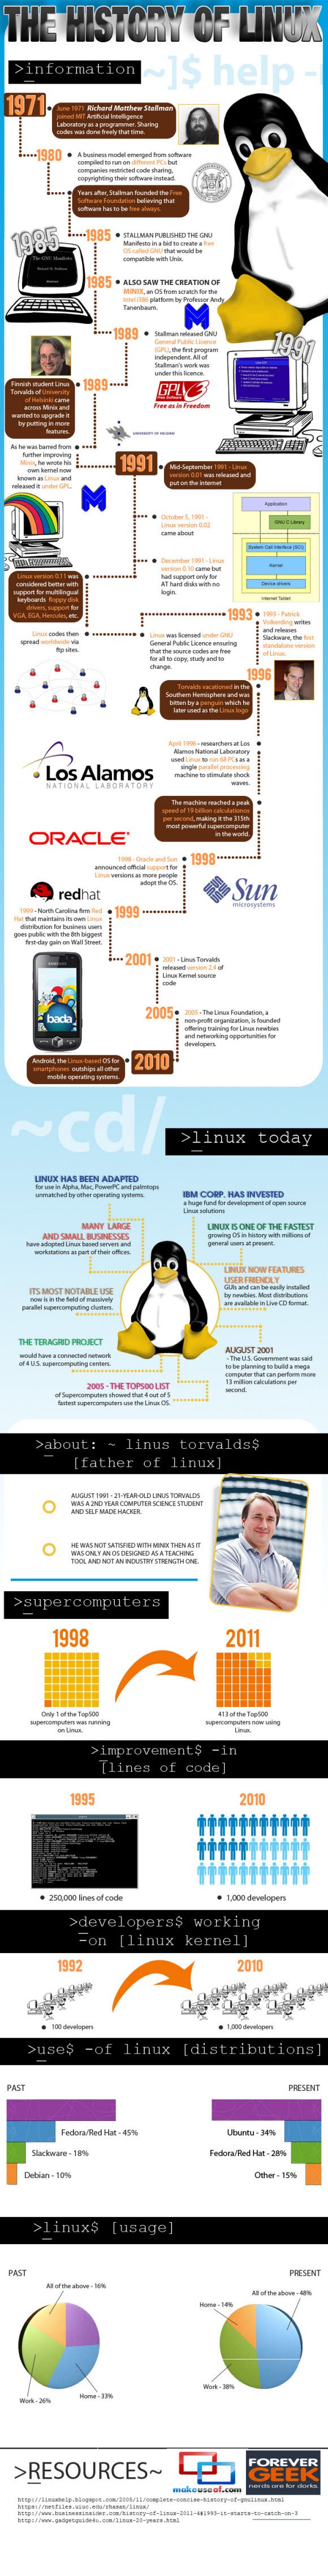 История Linux [INFOGRAPHIC] historyoflinux